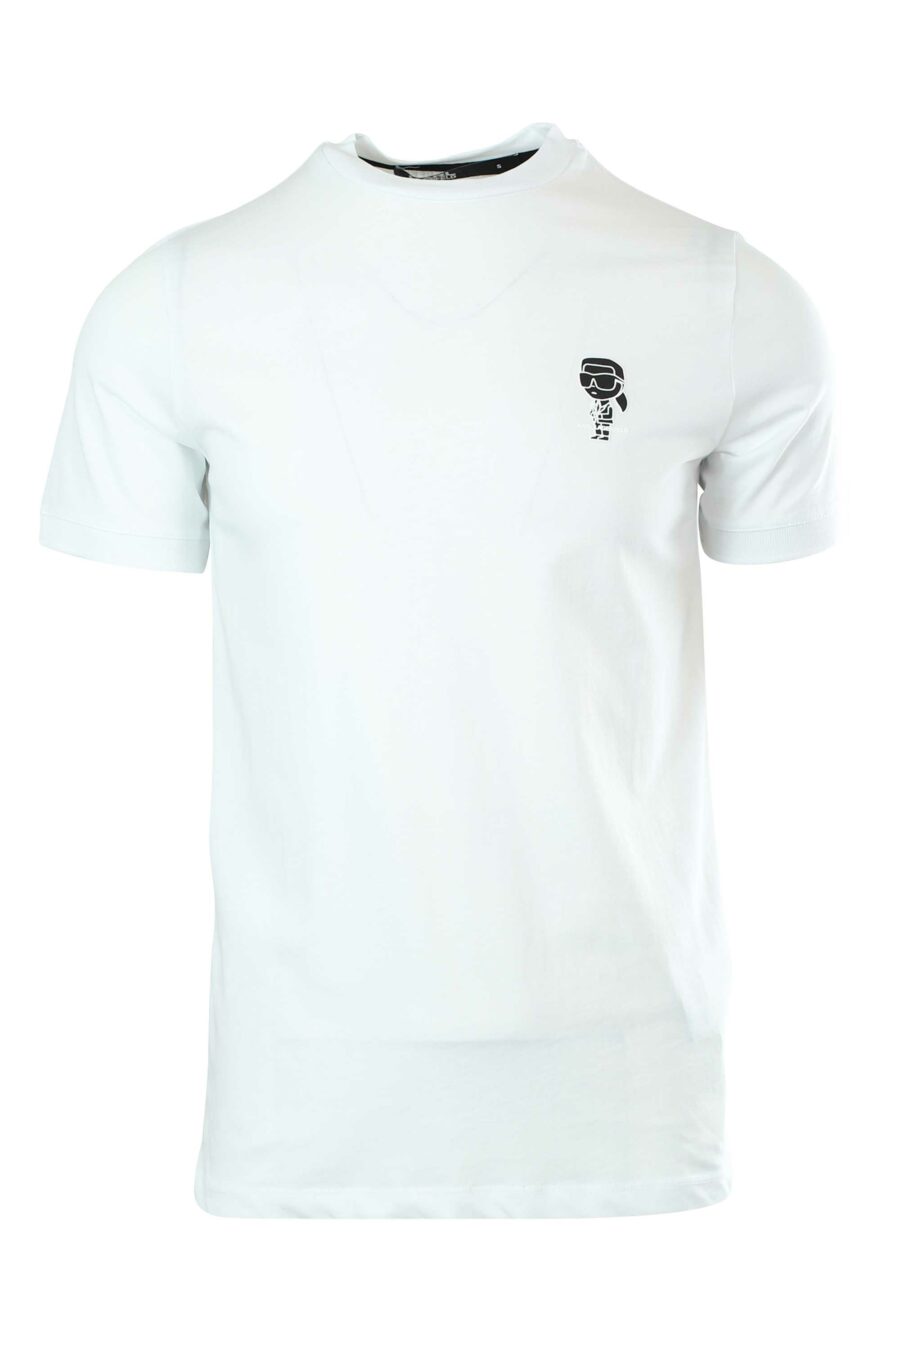 Camiseta blanca con logo negro pequeño - 4062226282444